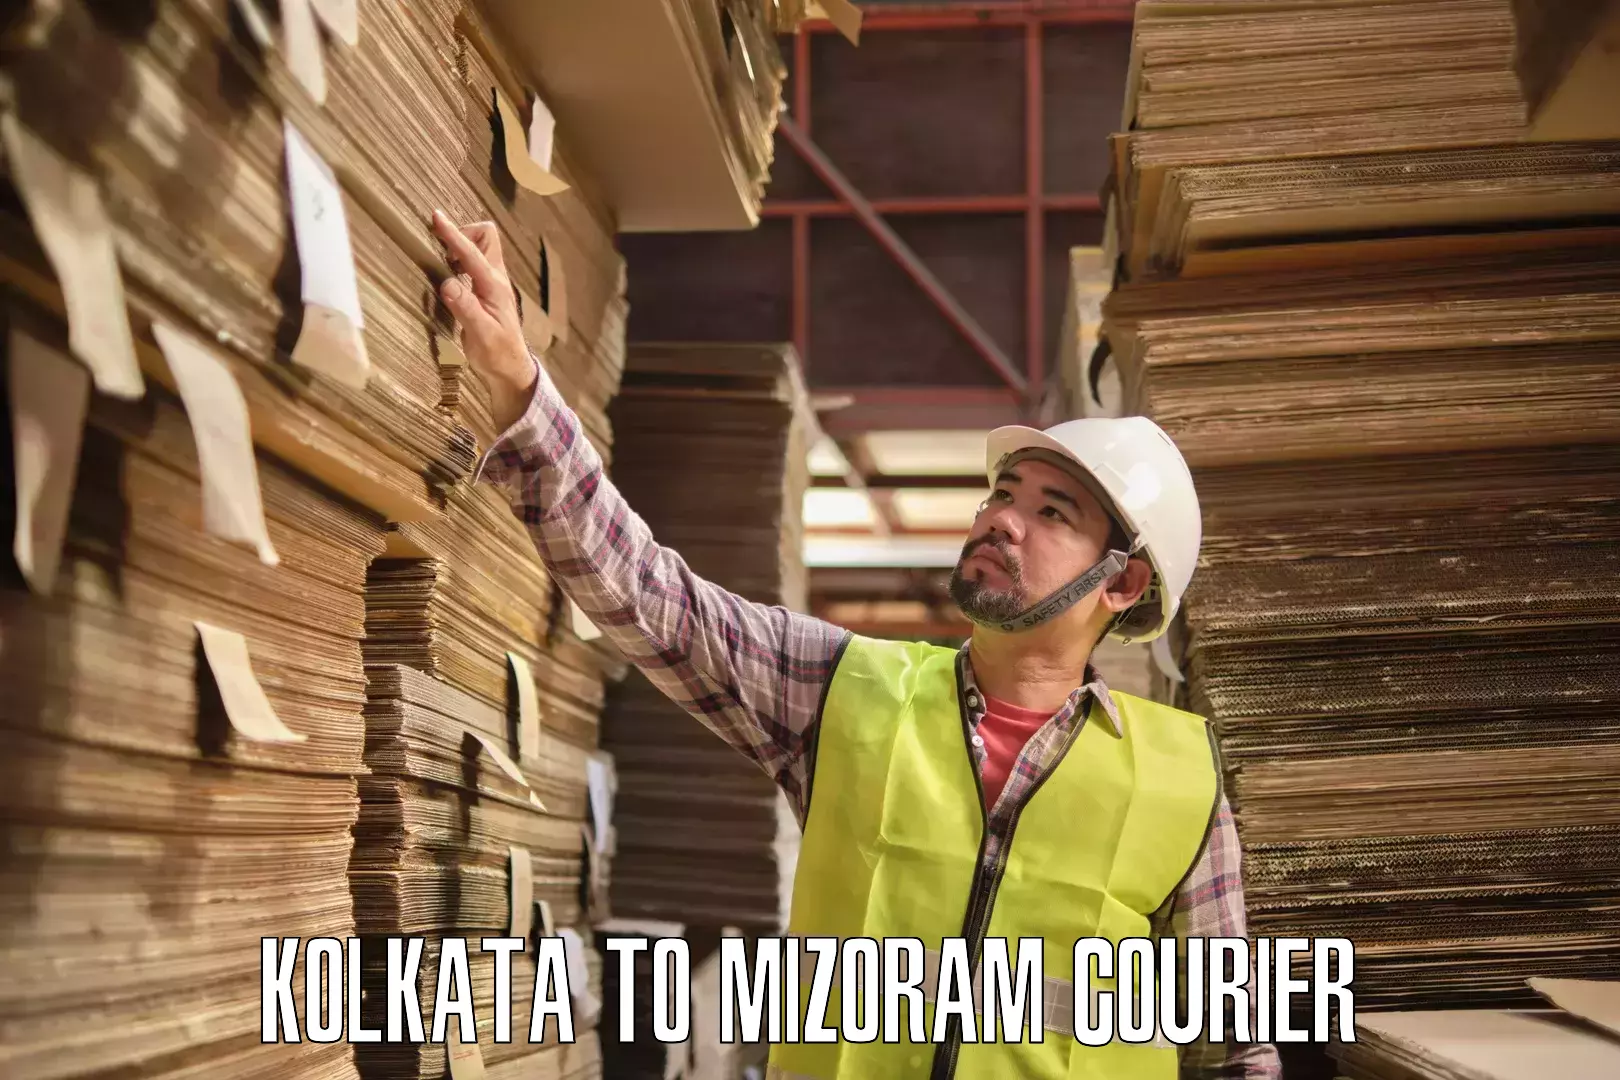 Courier service partnerships Kolkata to Saitual